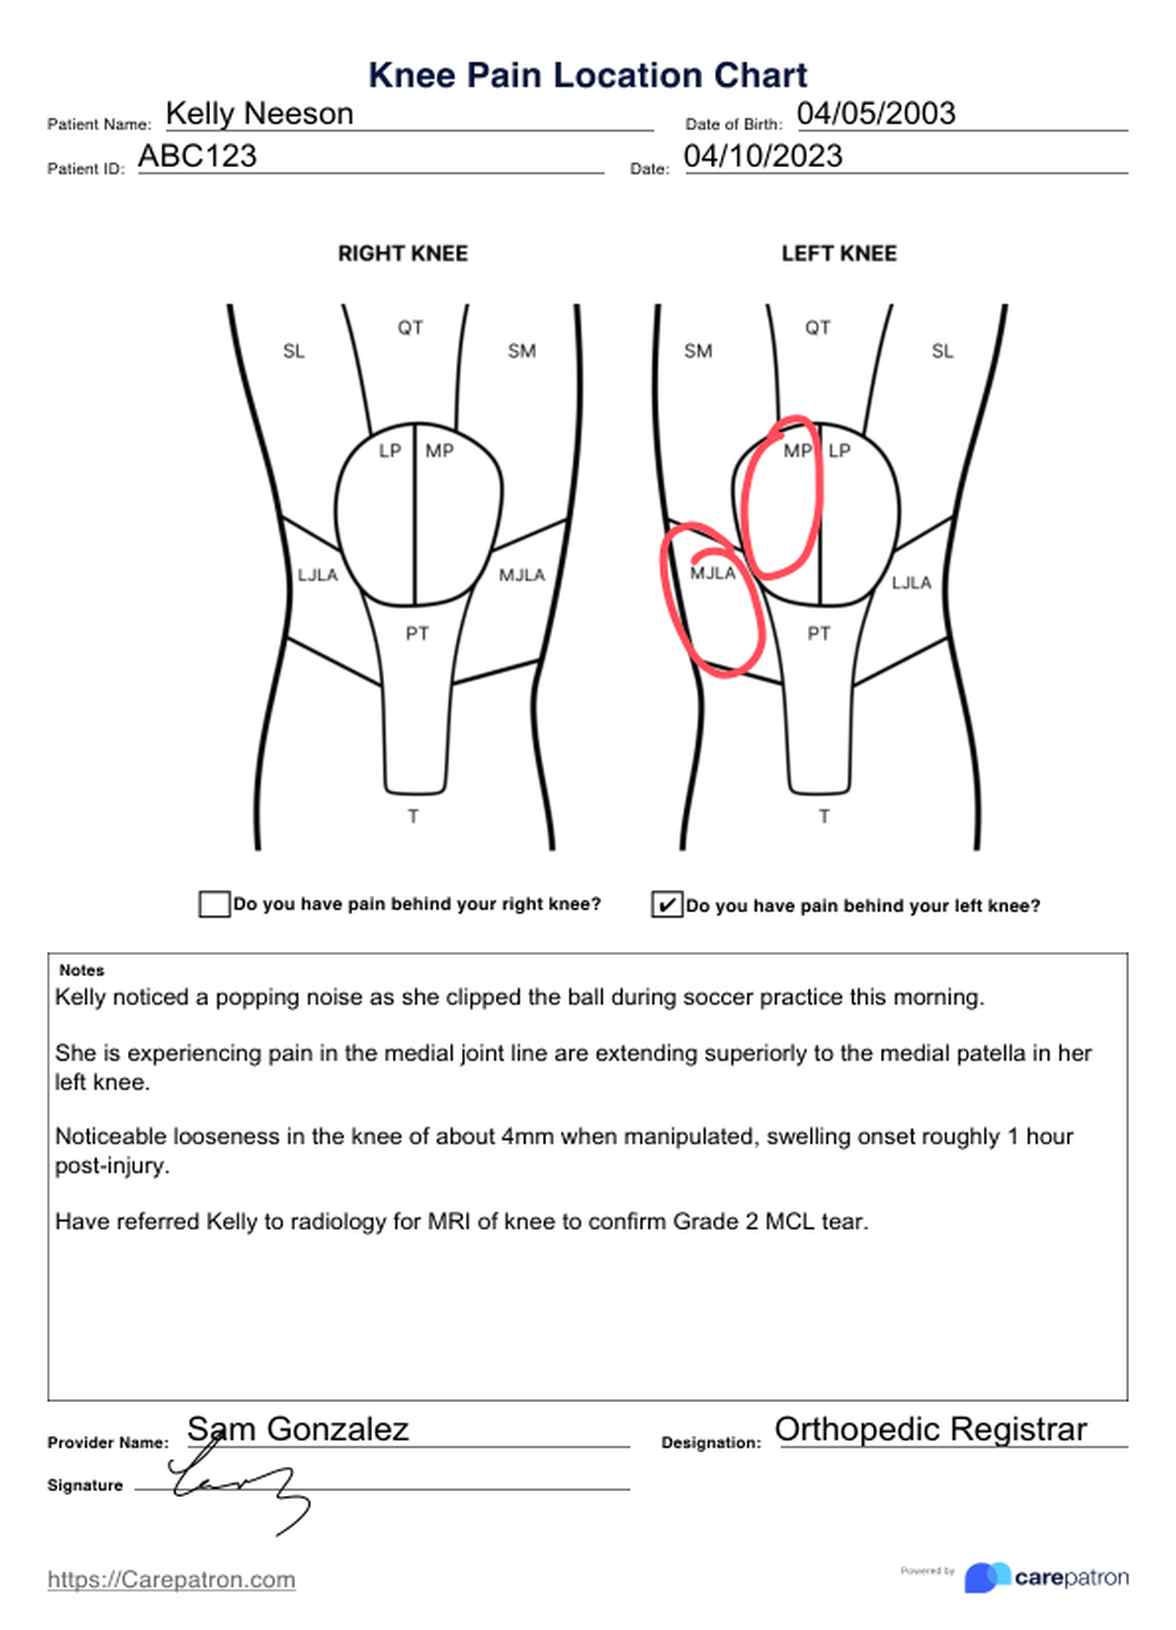 Knee Pain Location Chart PDF Example